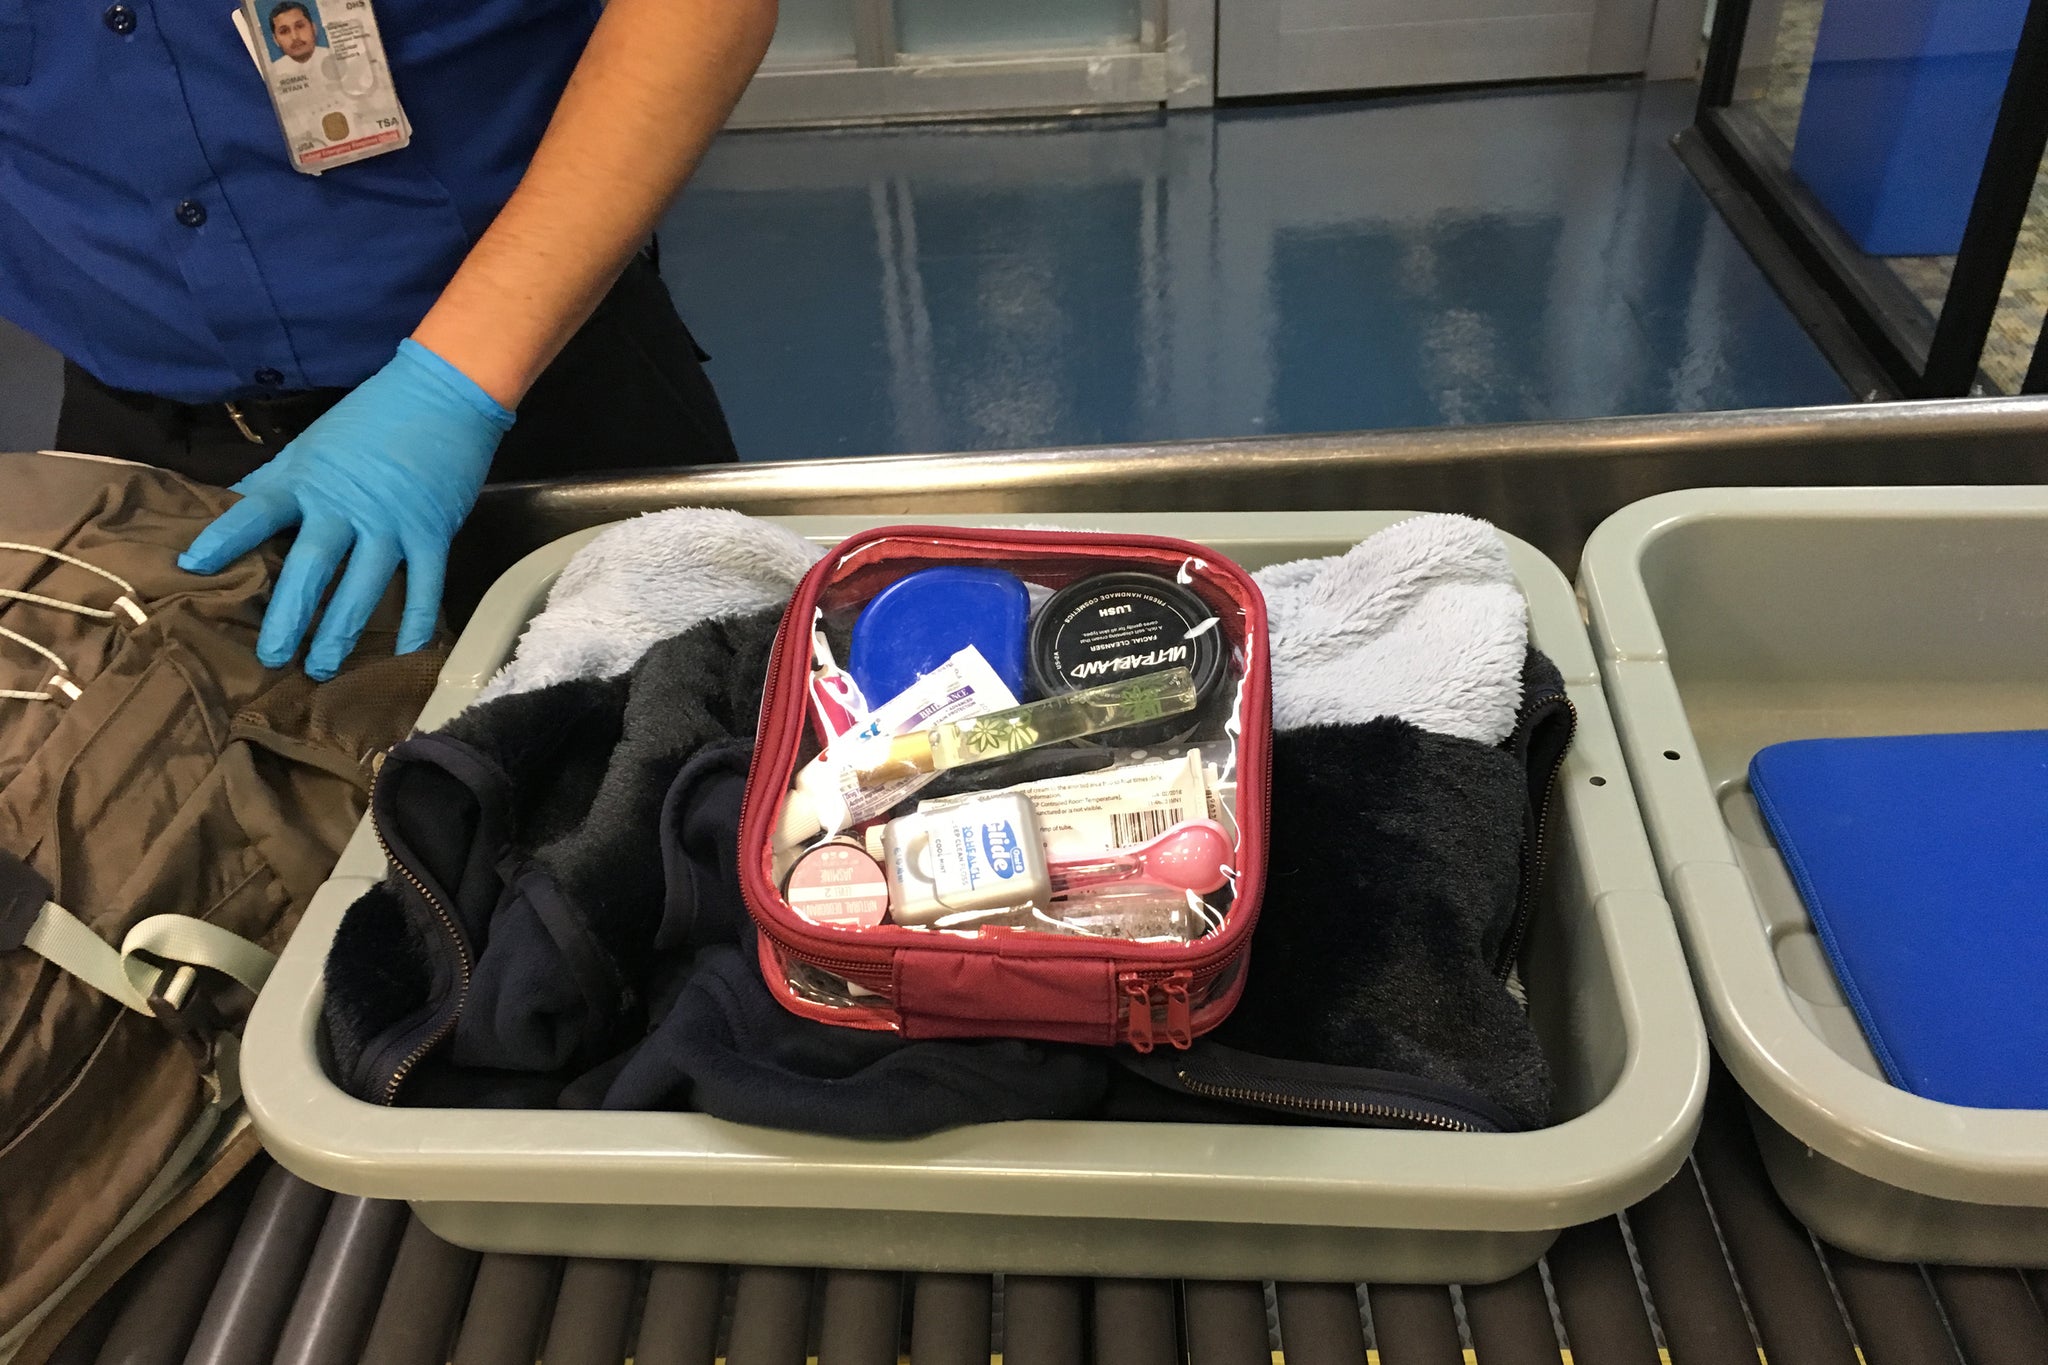 YAMIU Travel TSA Approved Toiletry Bag Waterproof Airline Clear